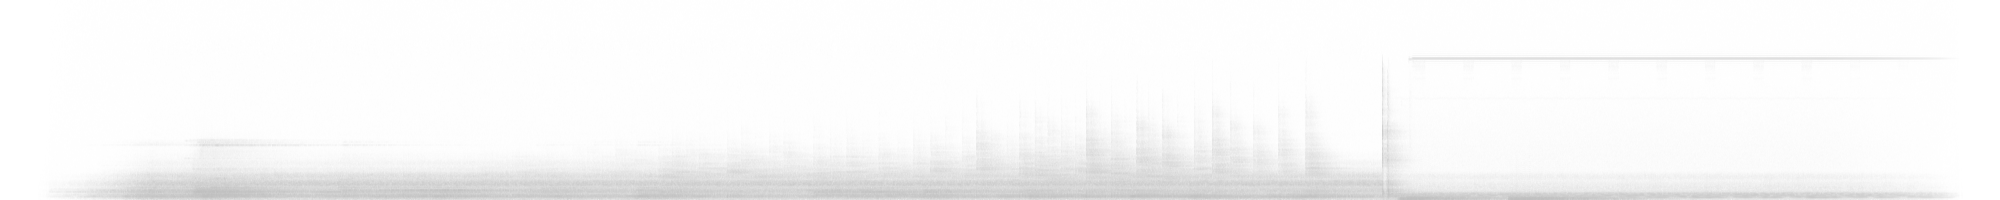 Spectrogram for 01 [four lines crossed]